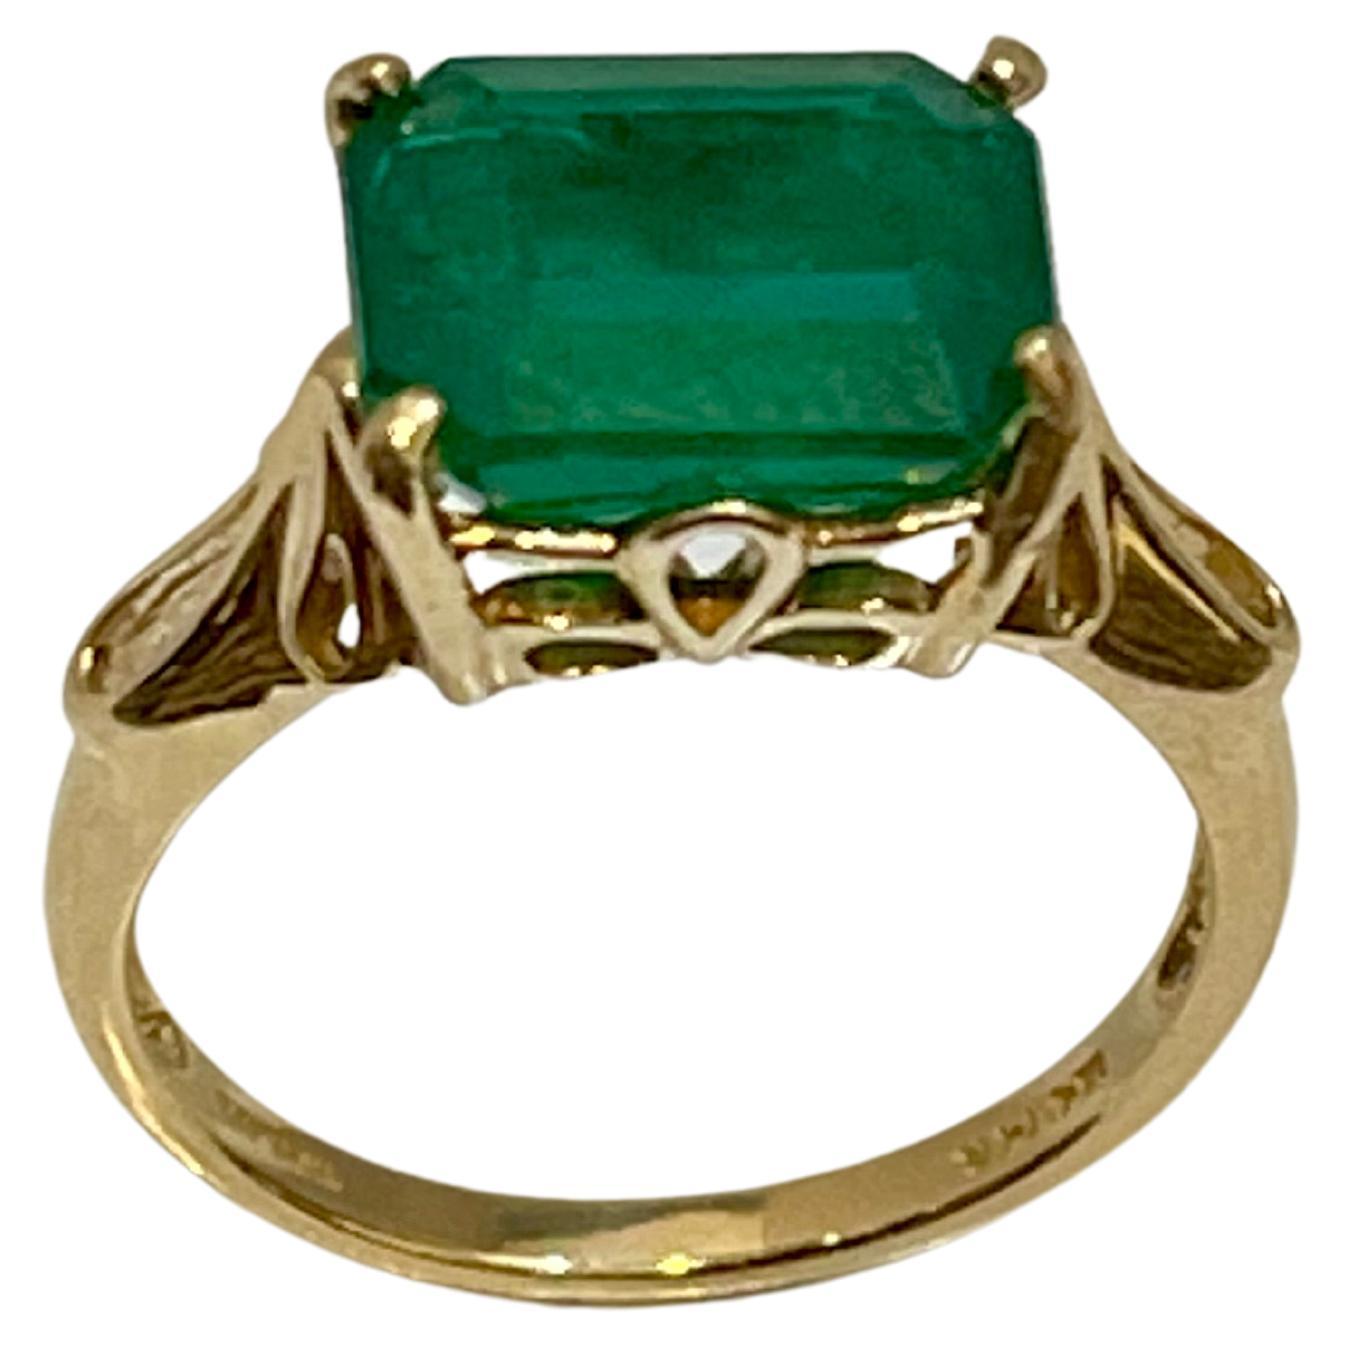 5 Carat Natural Emerald Cut Emerald Ring 14 Karat Yellow Gold Vintage